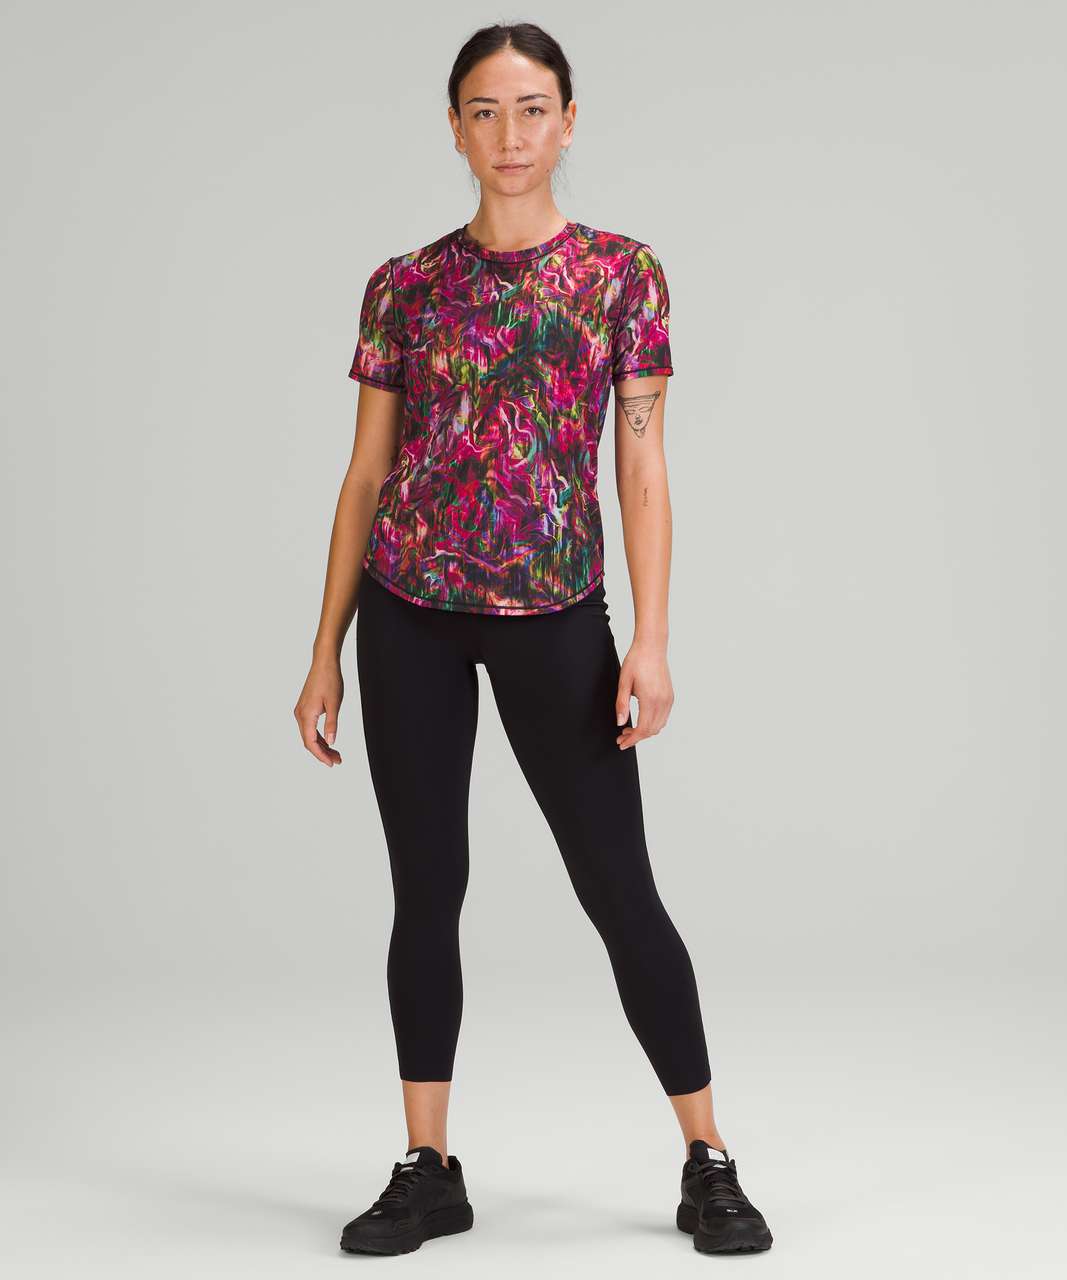 Lululemon High Neck Running and Training T-Shirt - Hyper Flow Pink Multi